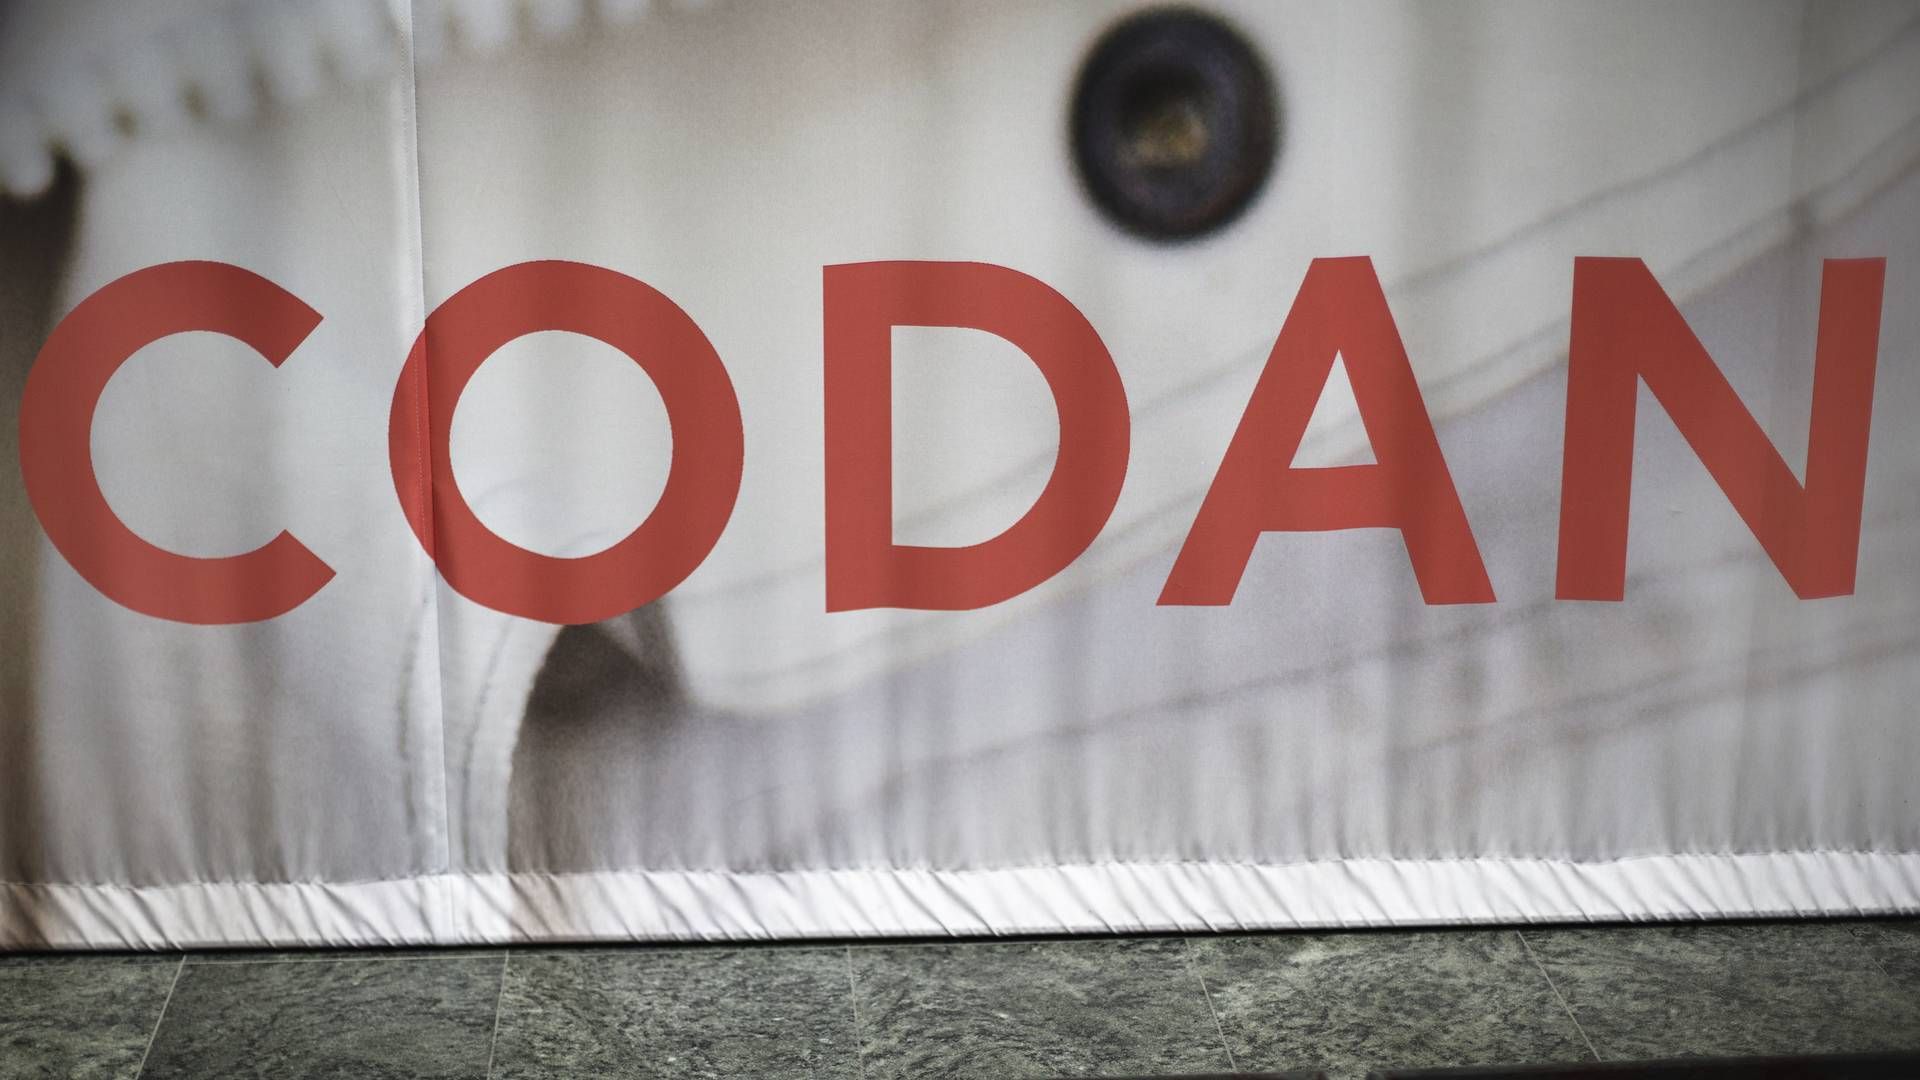 Codan blev i fredags solgt til Alm. Brand. | Foto: Mathias Svold/ERH